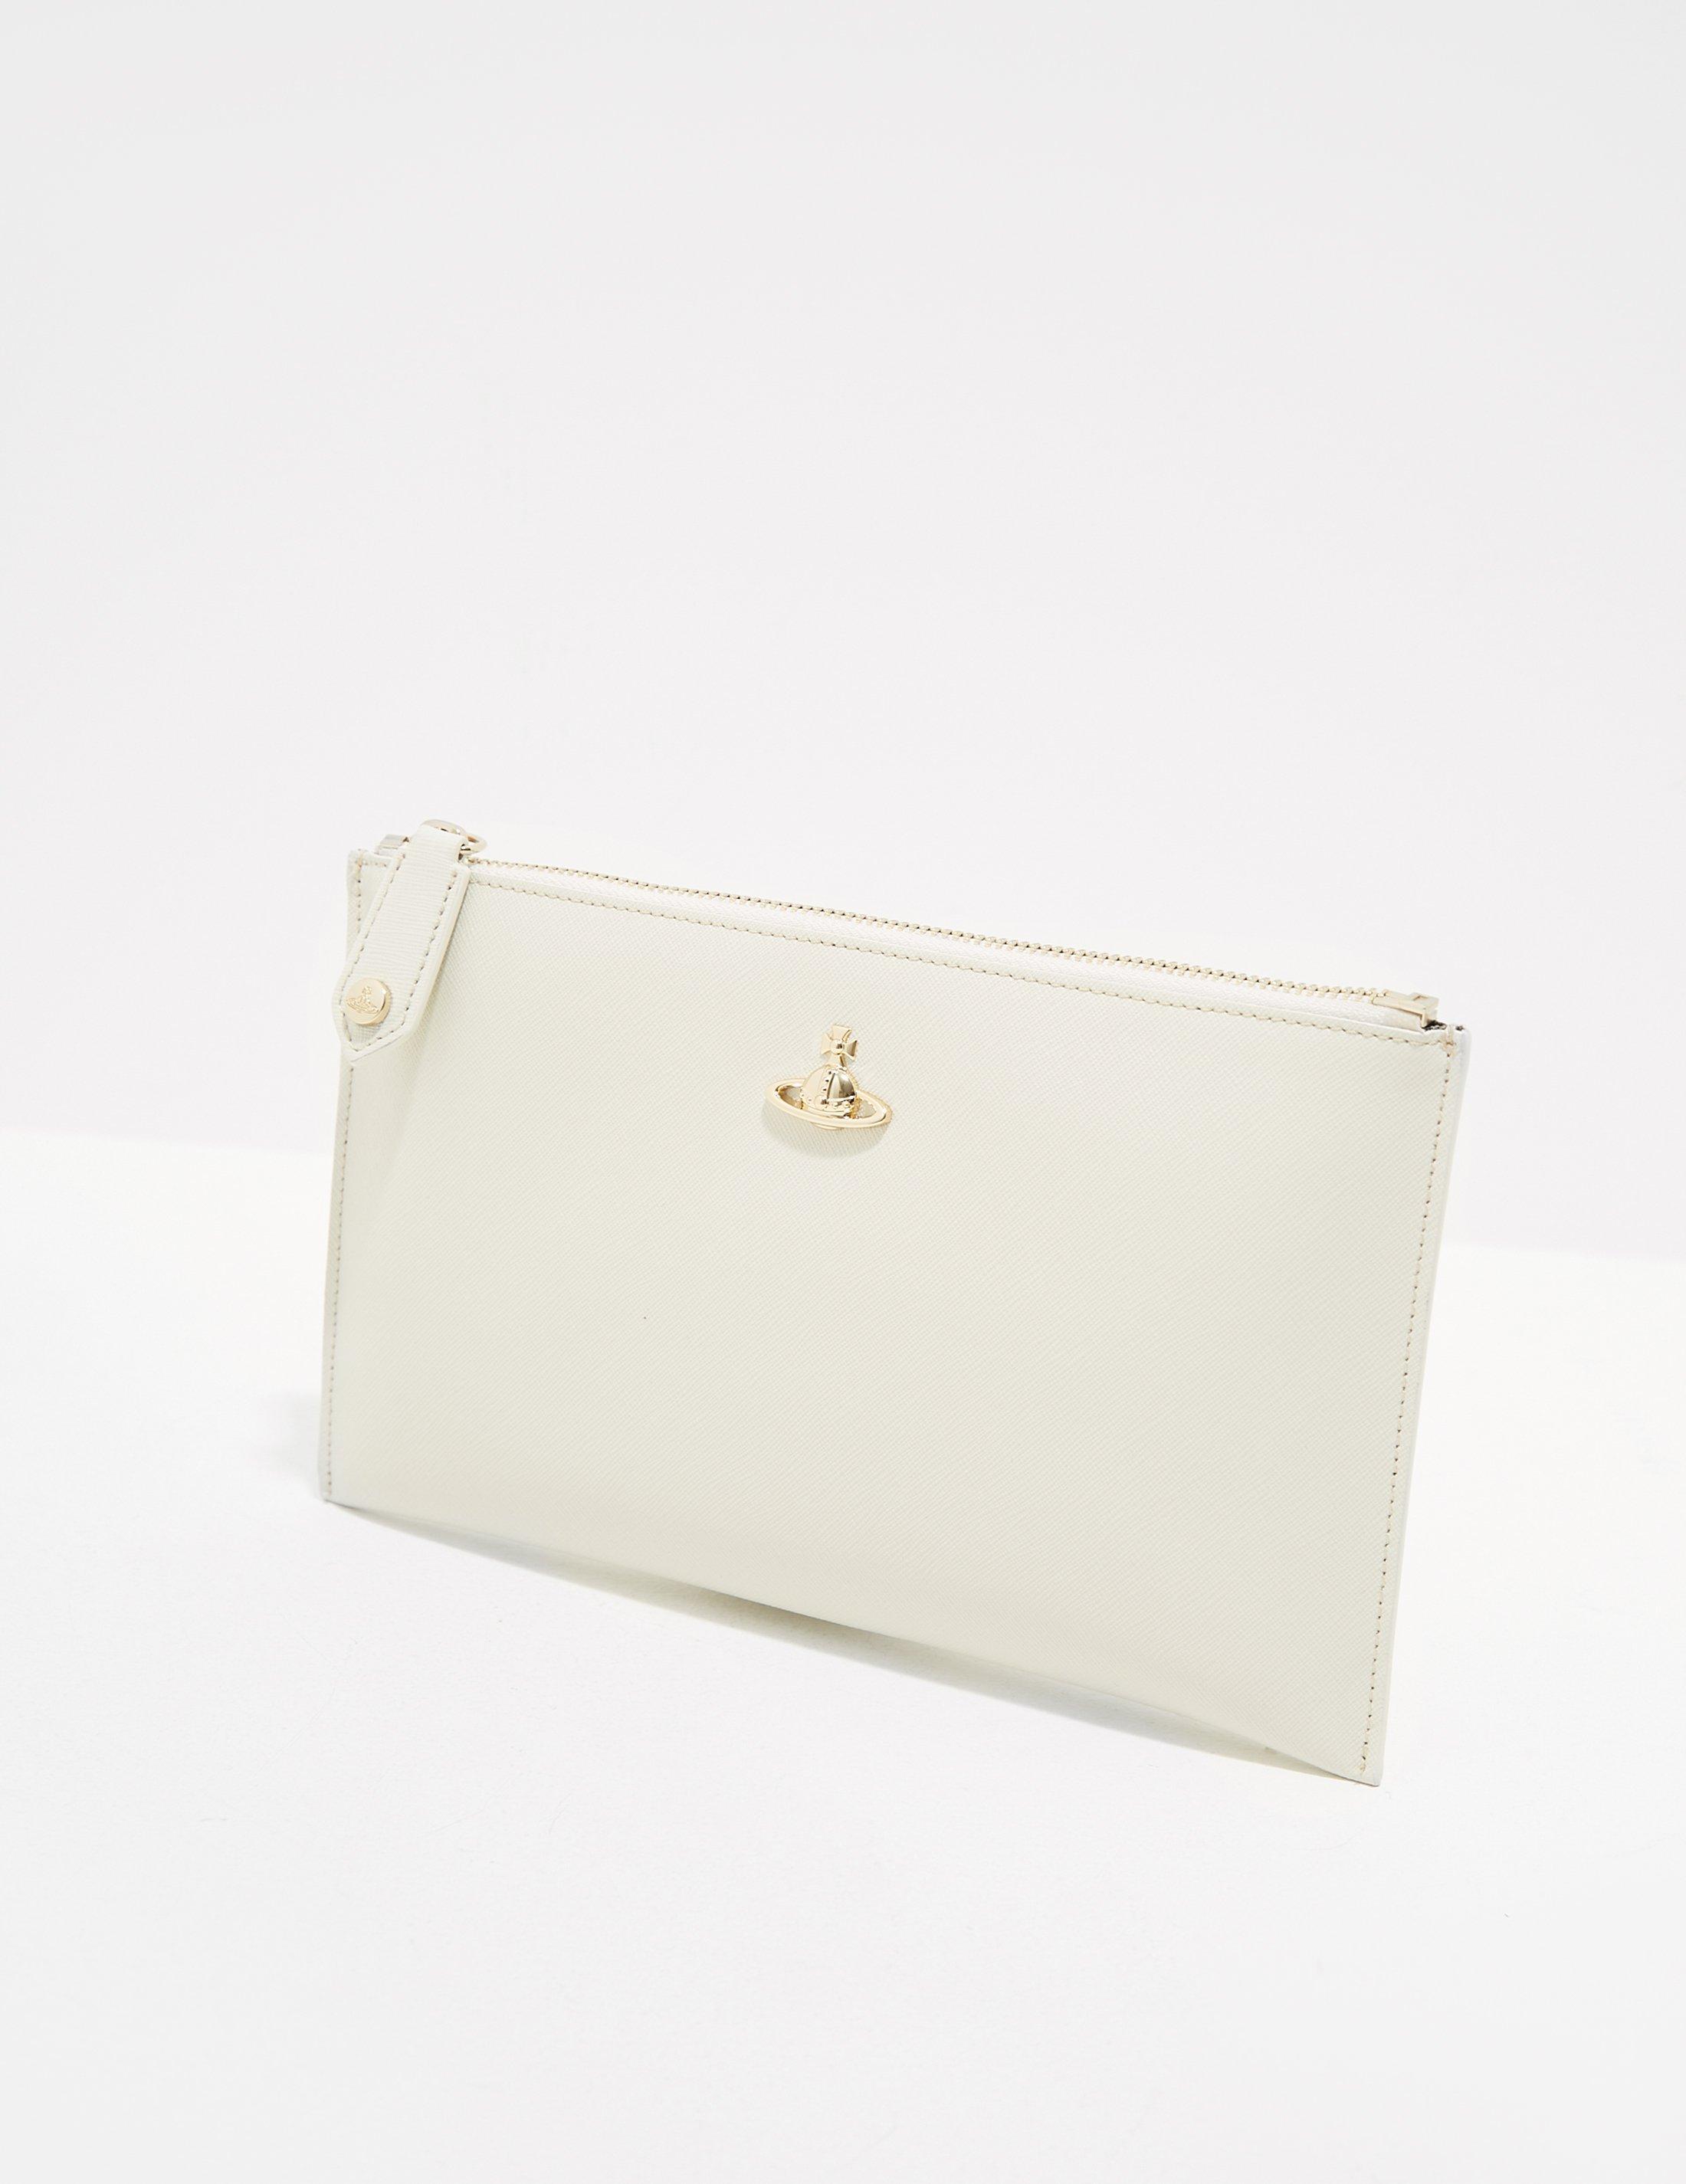 Vivienne Westwood Victoria Zip Clutch Bag Ivory in White - Lyst